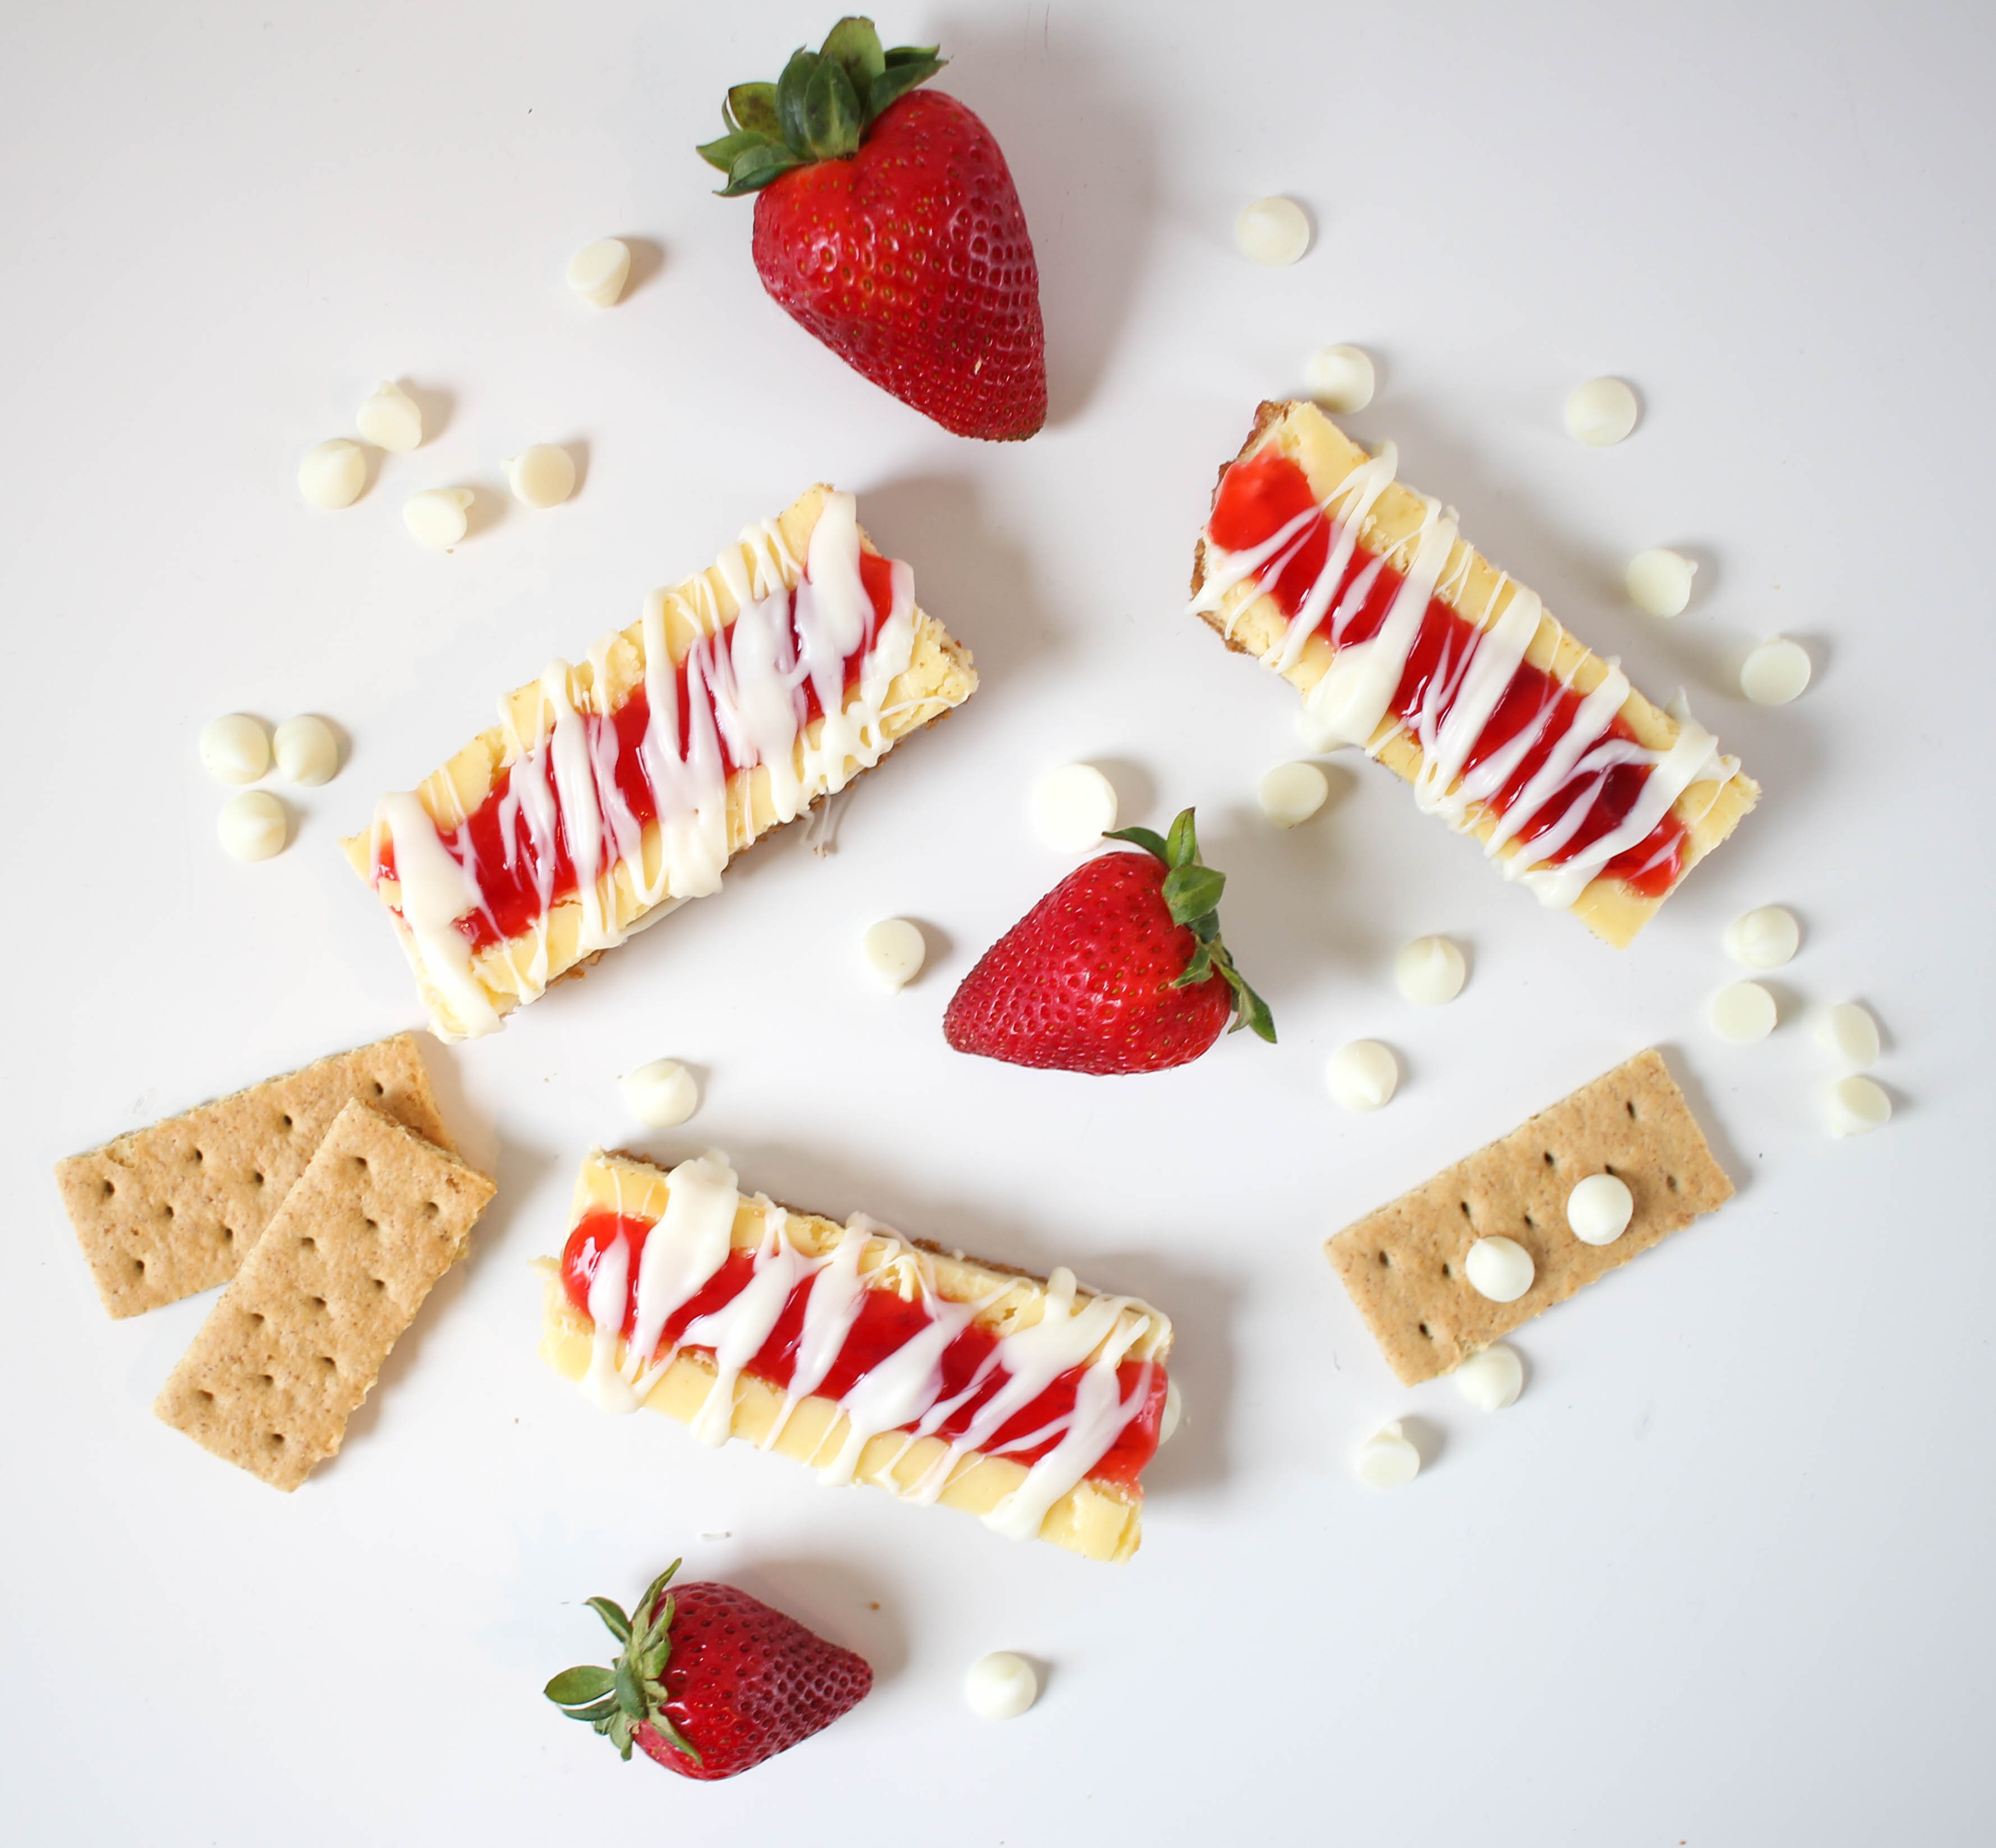 Strawberry Cheesecake Bars by Twinspiration